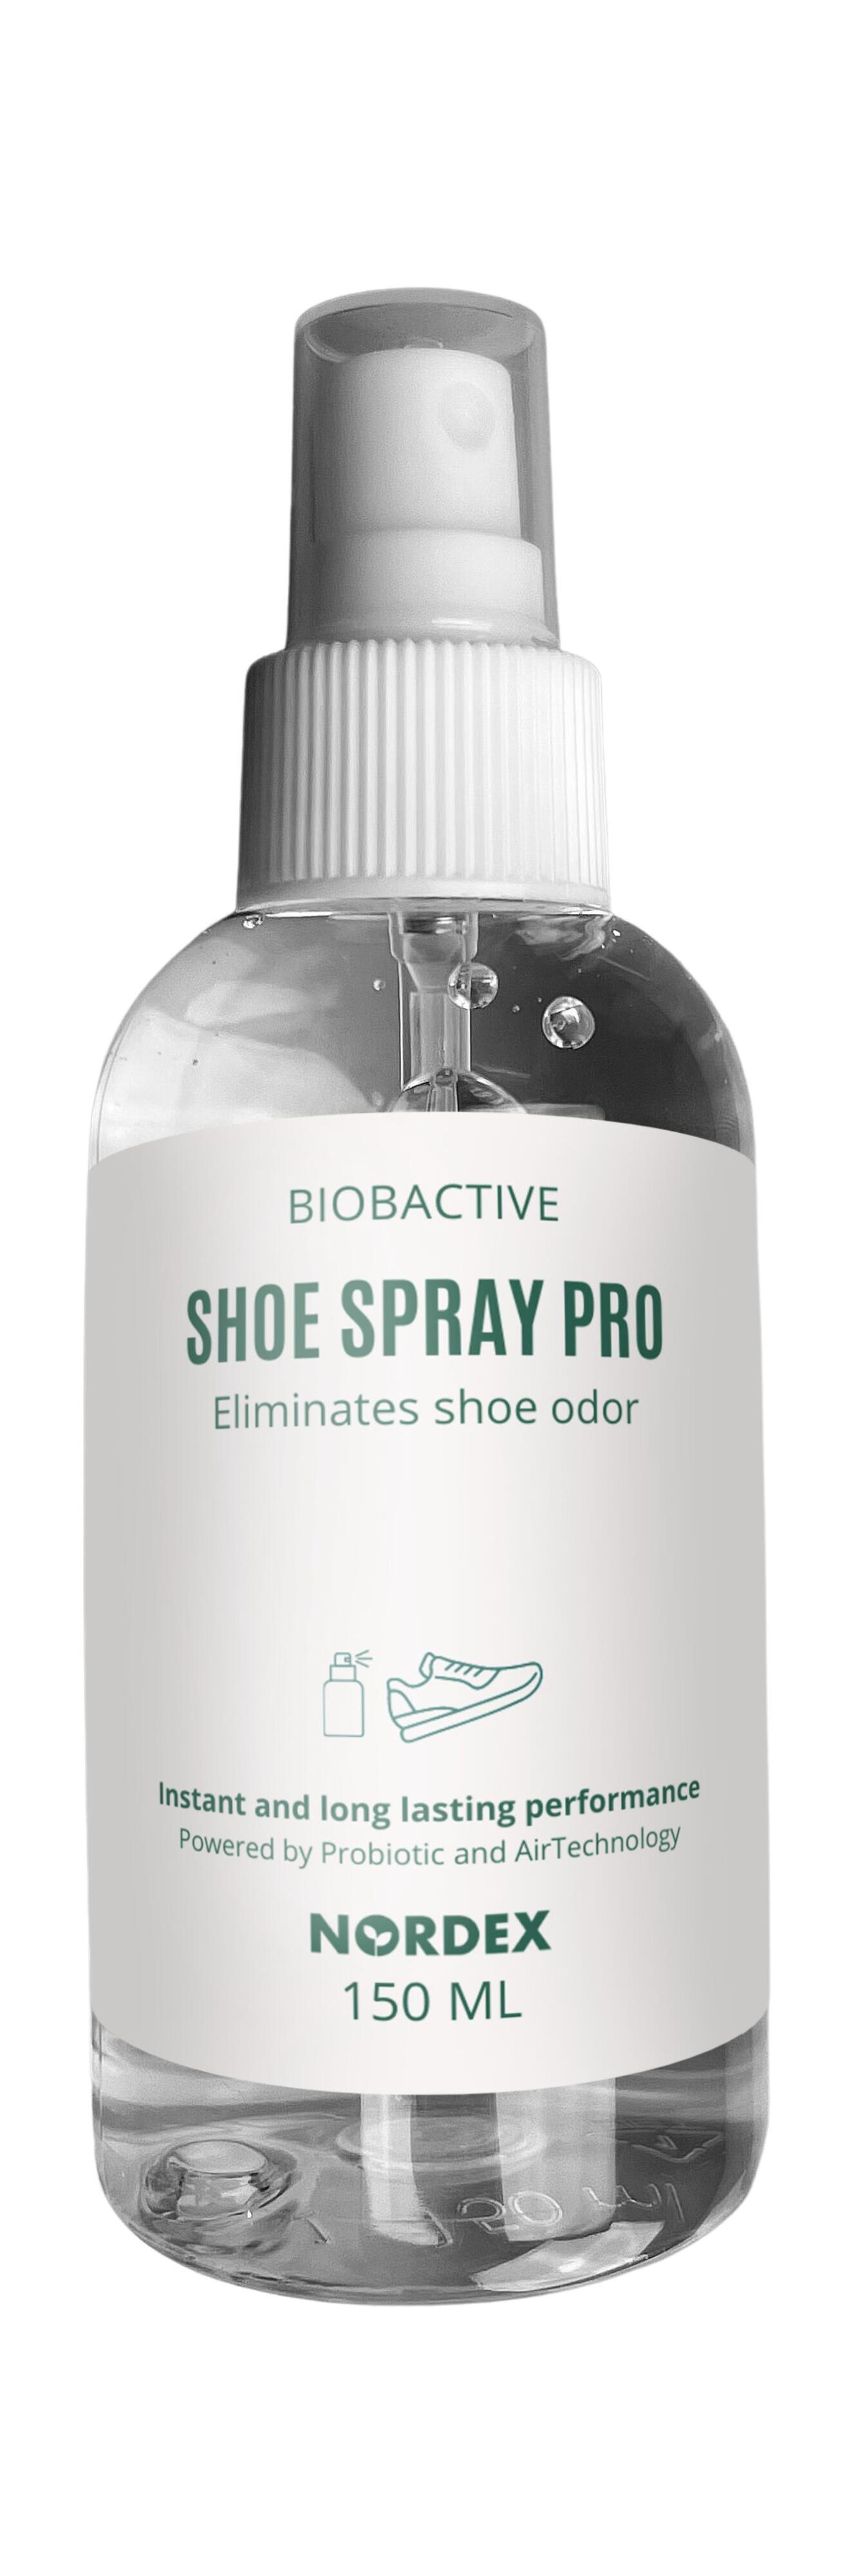 Shoe Spray Nordex Biobactive Pro 150ml